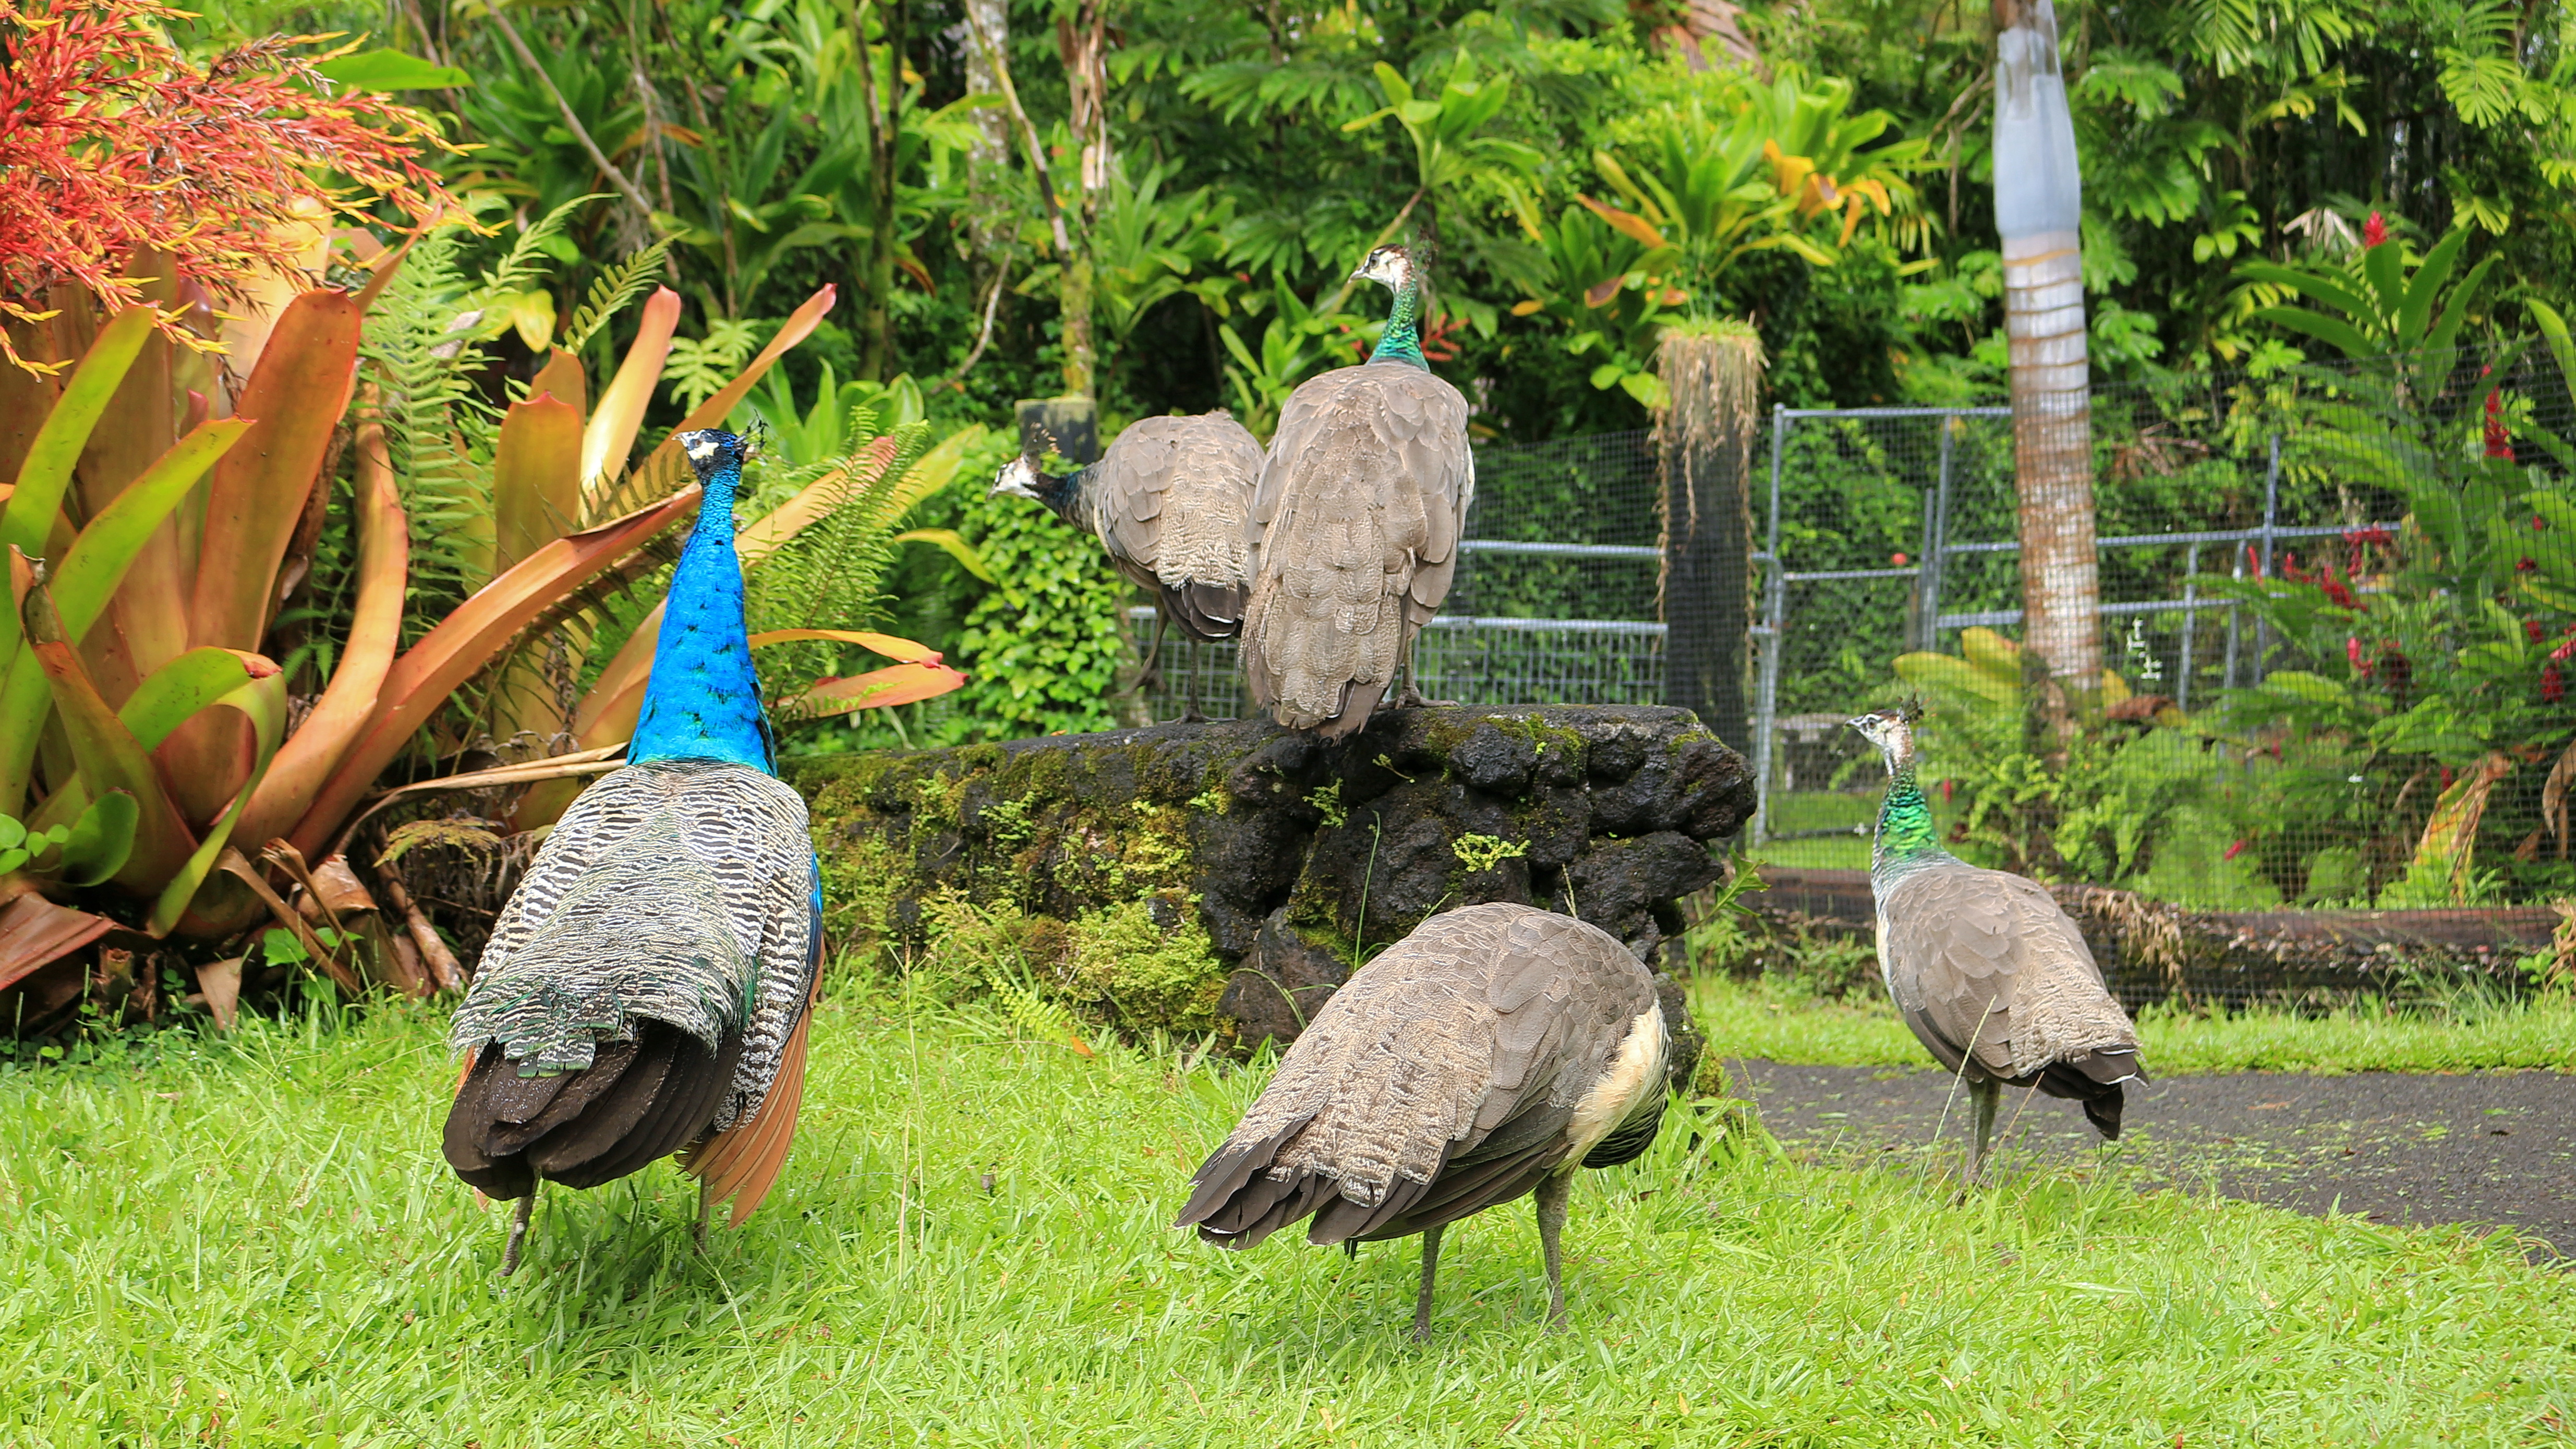 File:Pana'ewa Rainforest Zoo & Gardens, Hilo (504303) (23467934816).jpg -  Wikimedia Commons